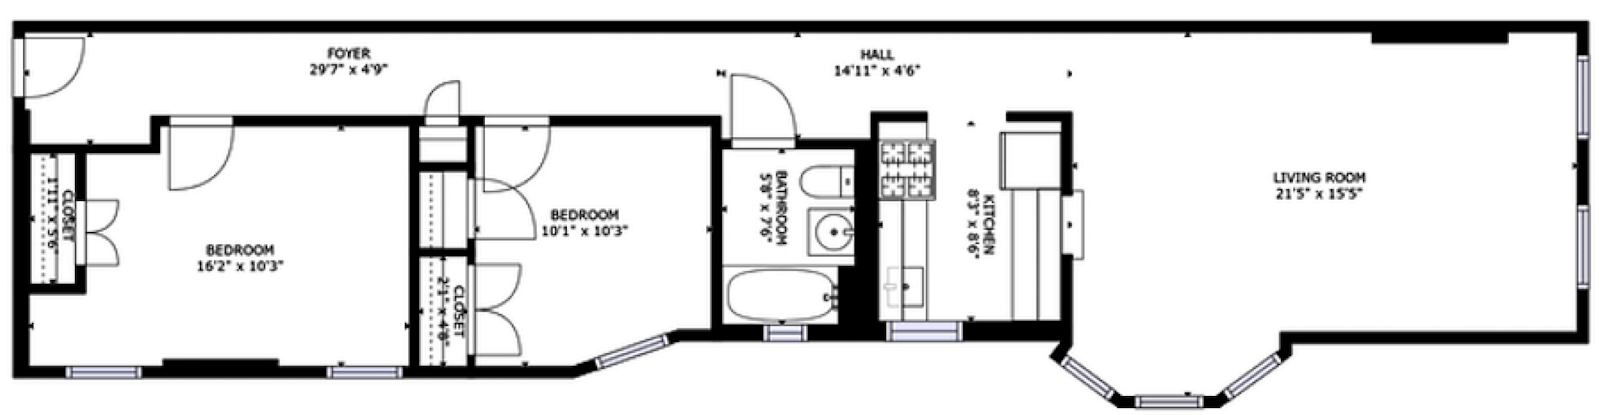 Floorplan for 133 West 140th Street, 34